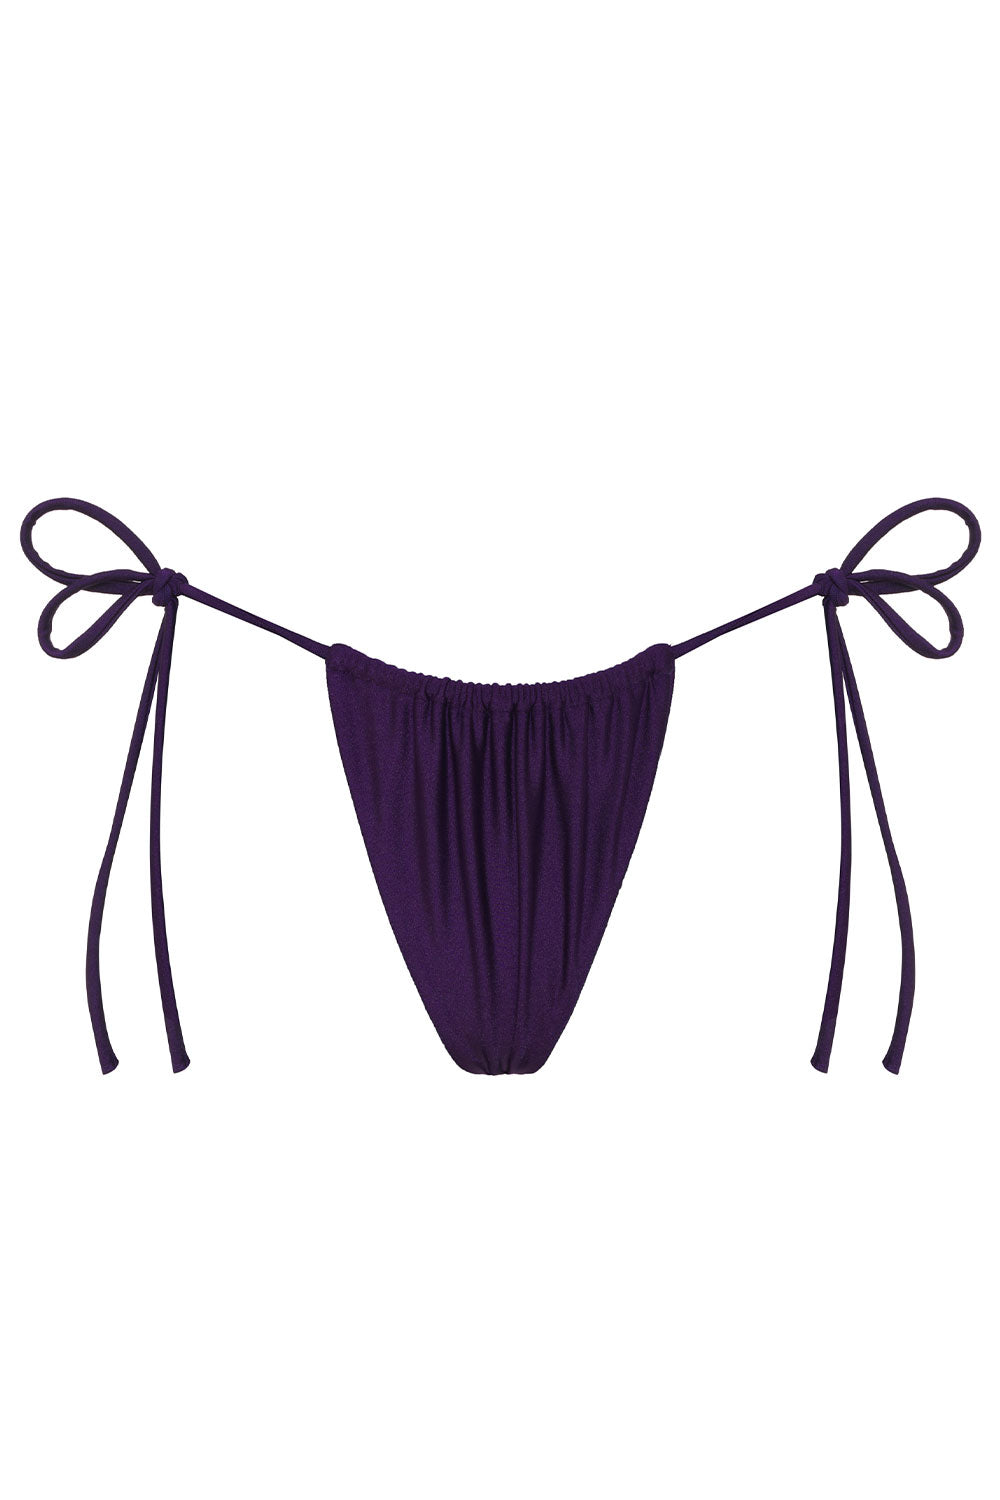 Tia Shine String Bikini Bottom - Candied Violet